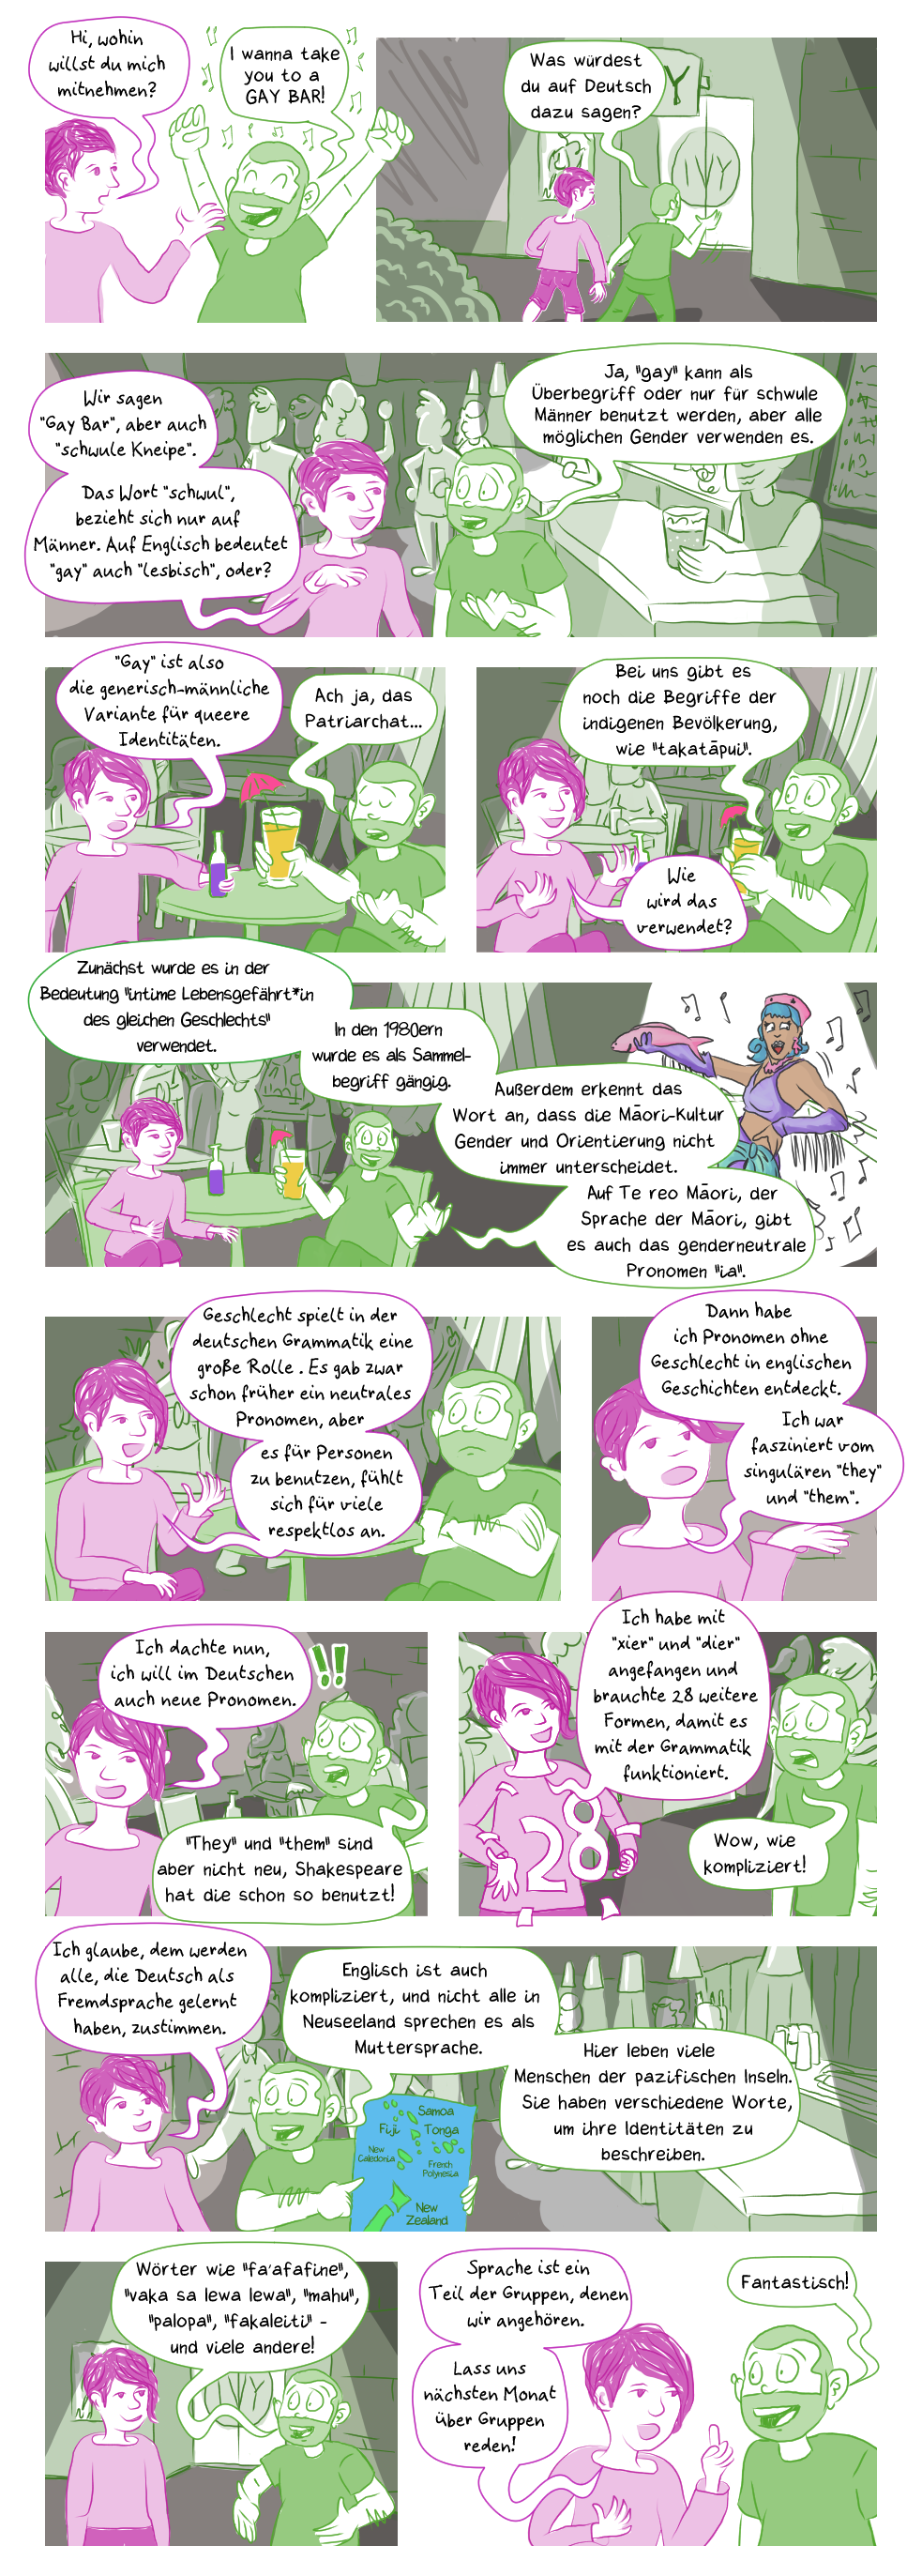 visuelles Comic: Queere Comic Konversation: August - Labels, rein text-basiertes Comic folgt nach den Anmerkungen